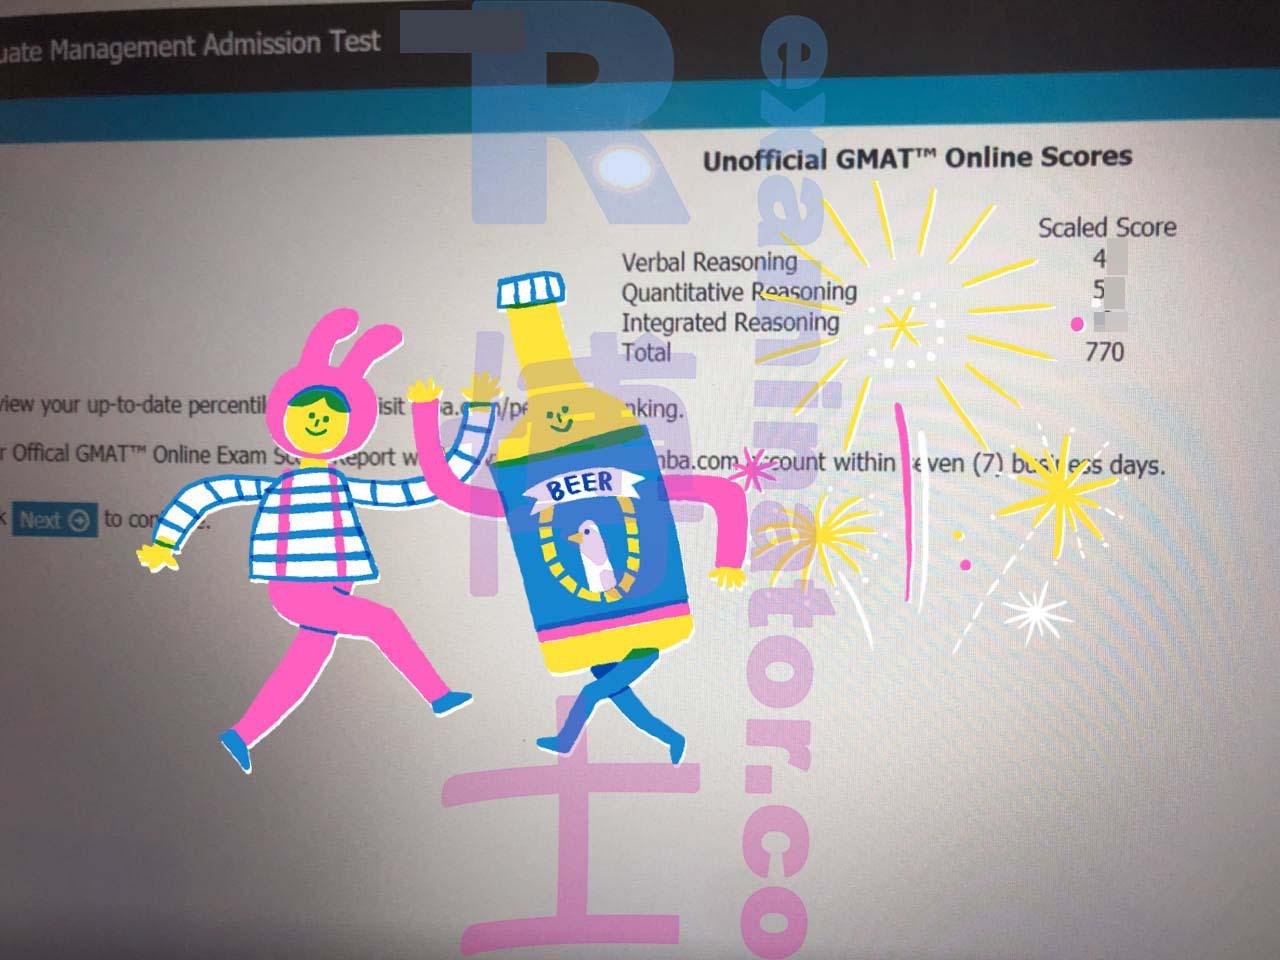 score image for GMAT Proxy Testing success story #169